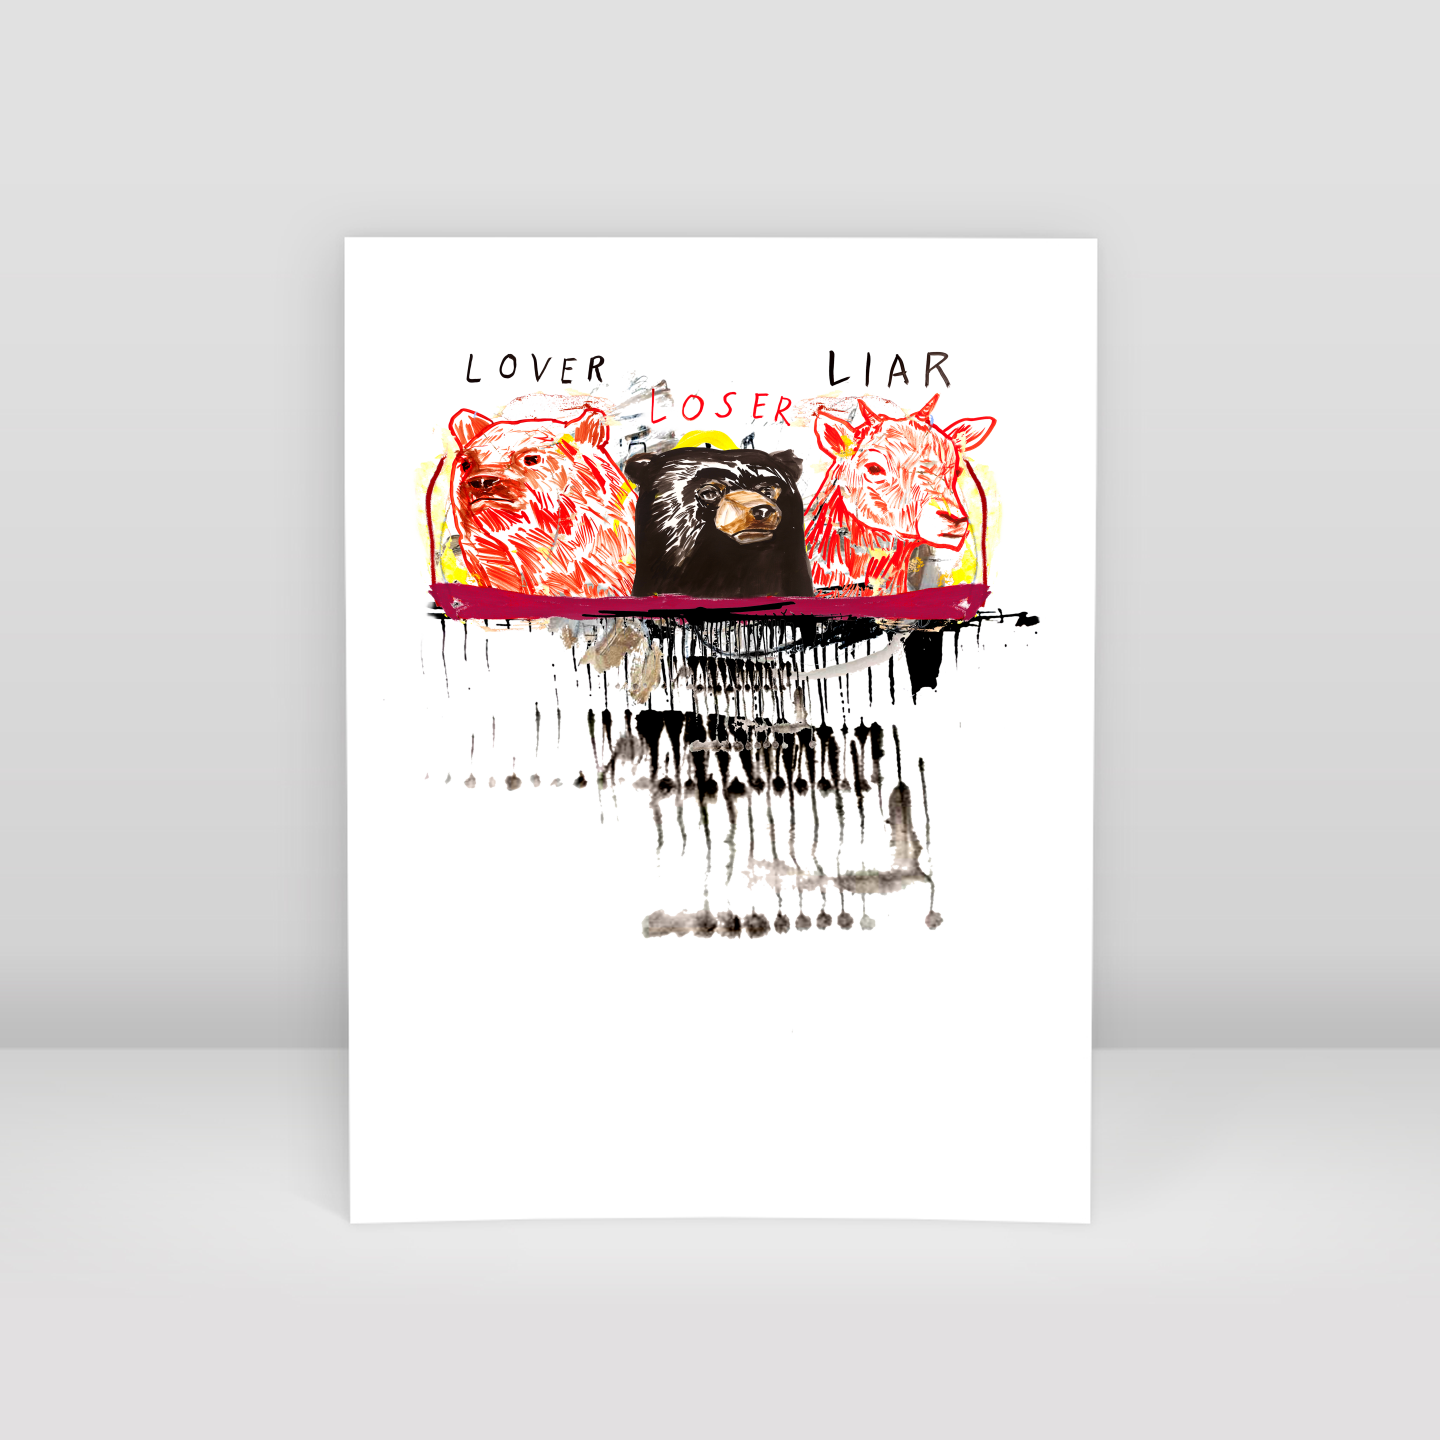 Lover Loser Liar - Art Print